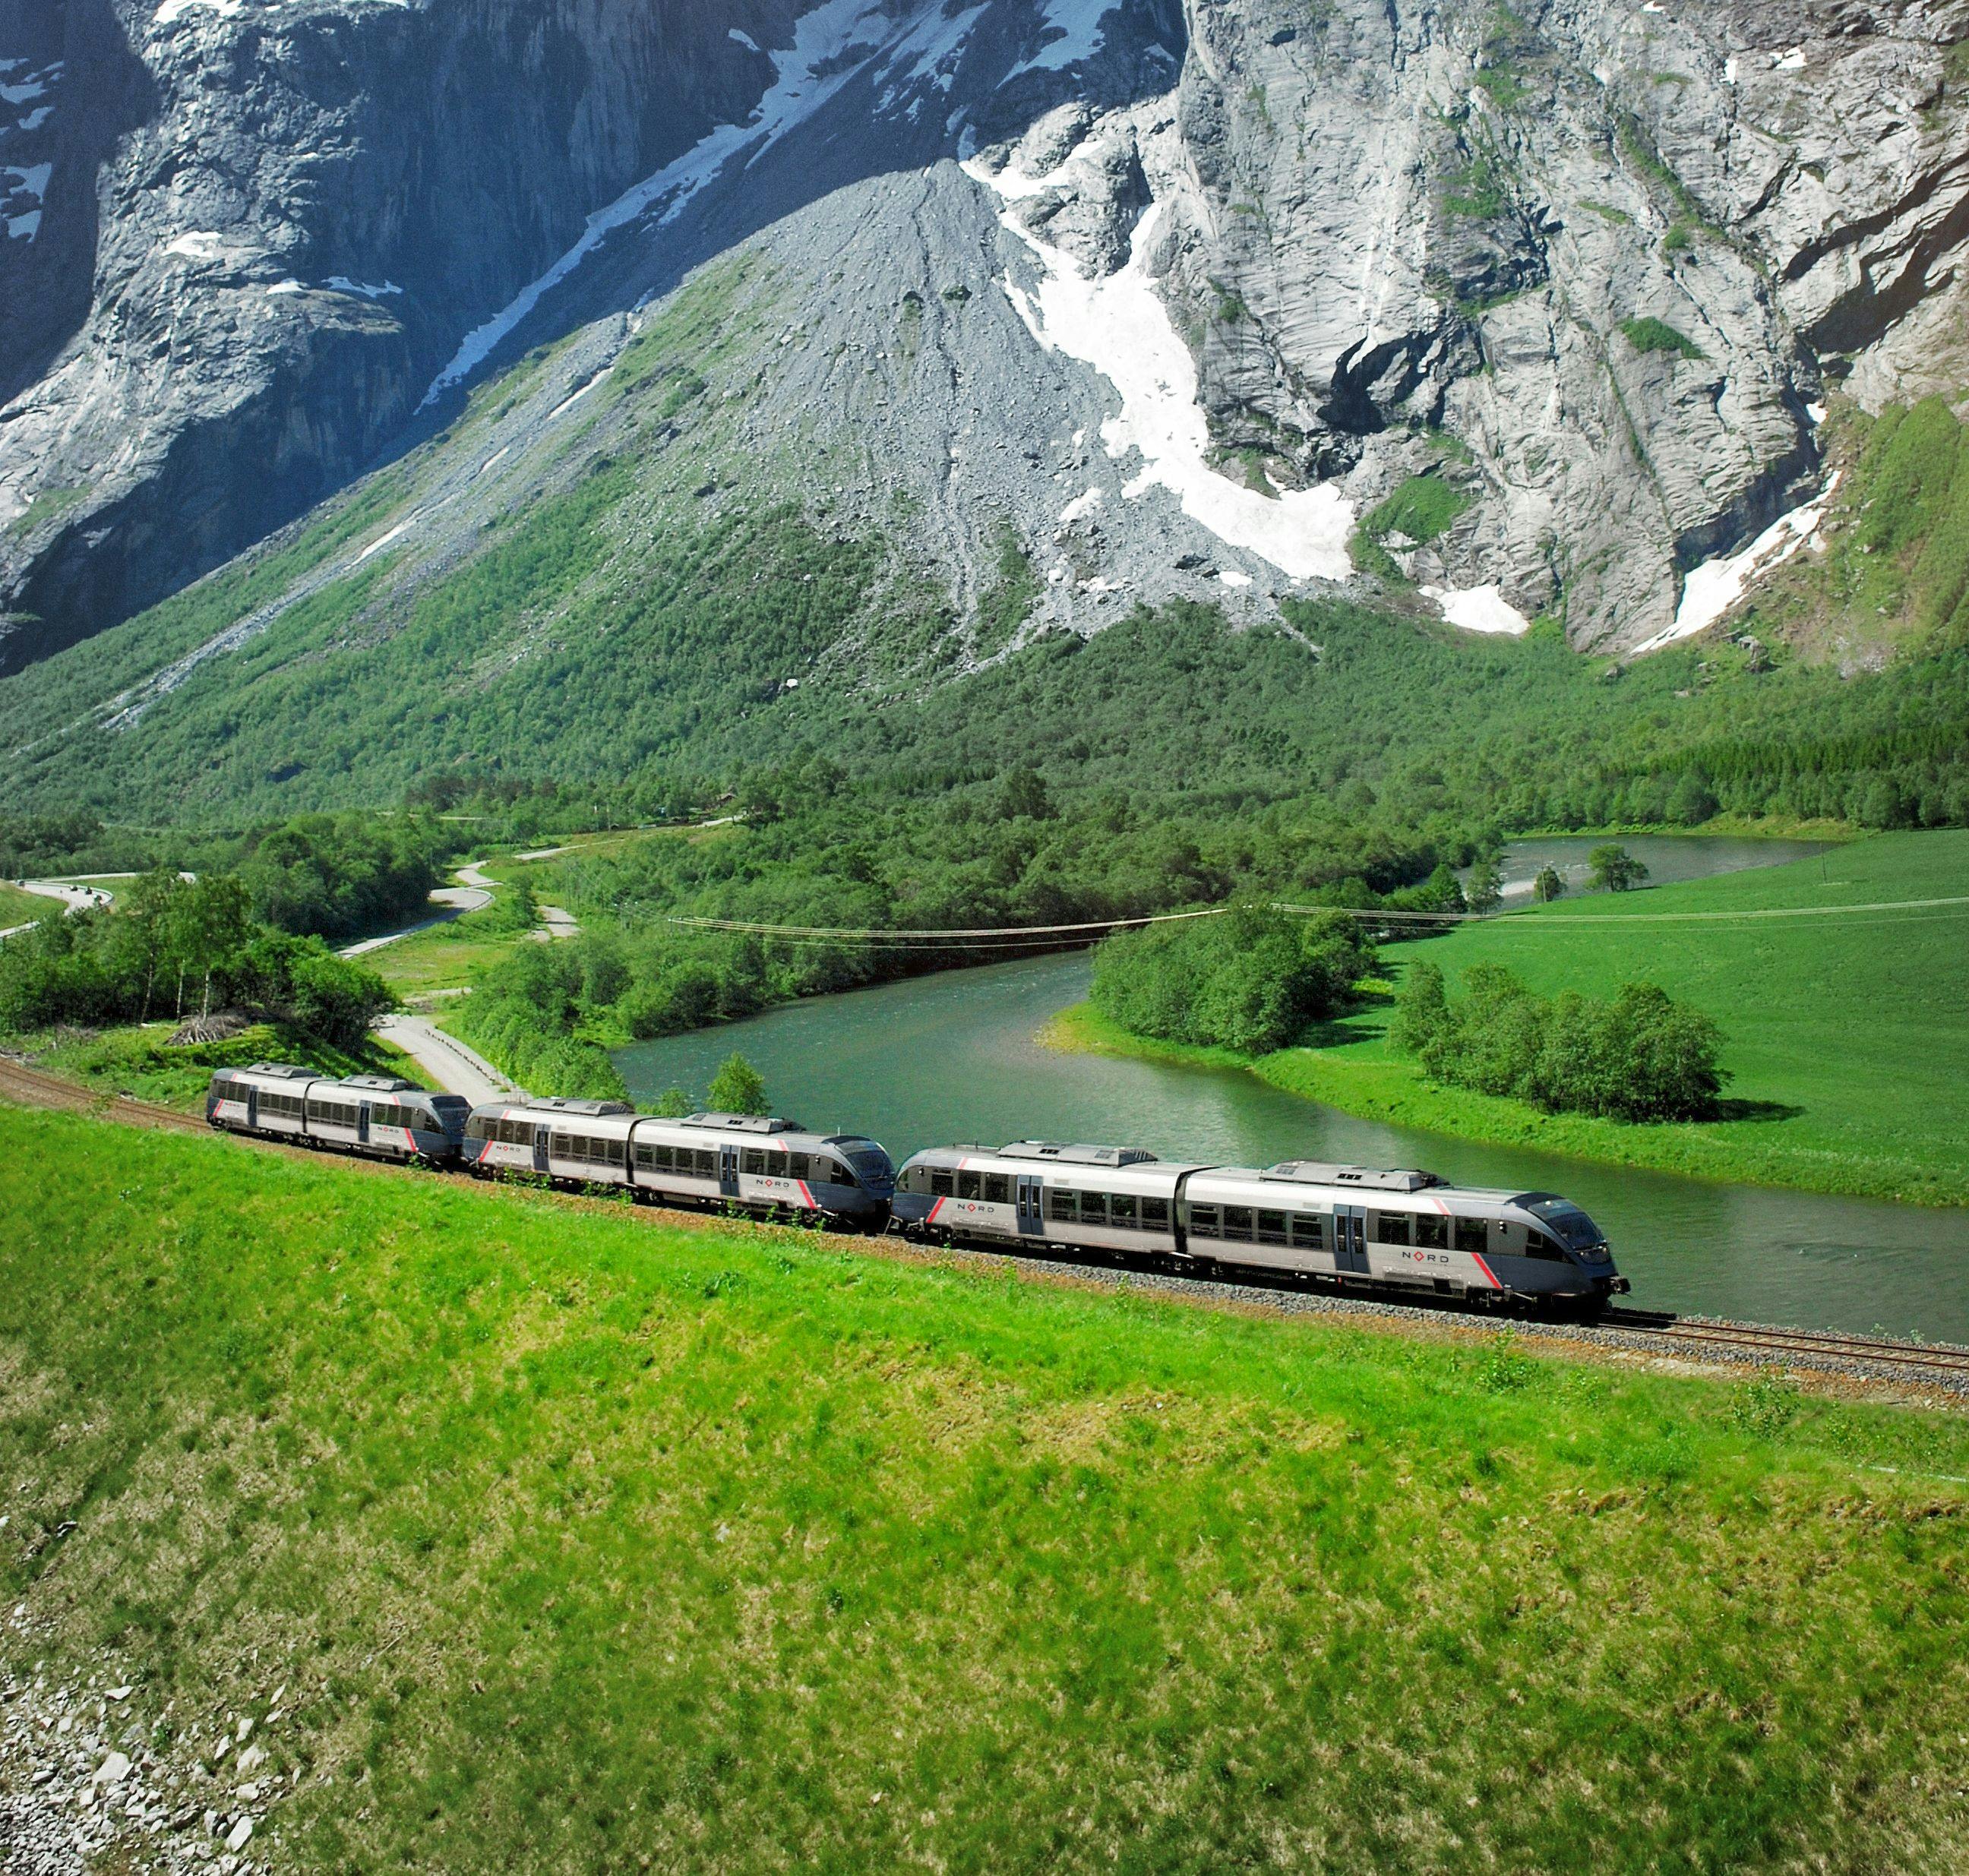 The Raumabanen Railway train